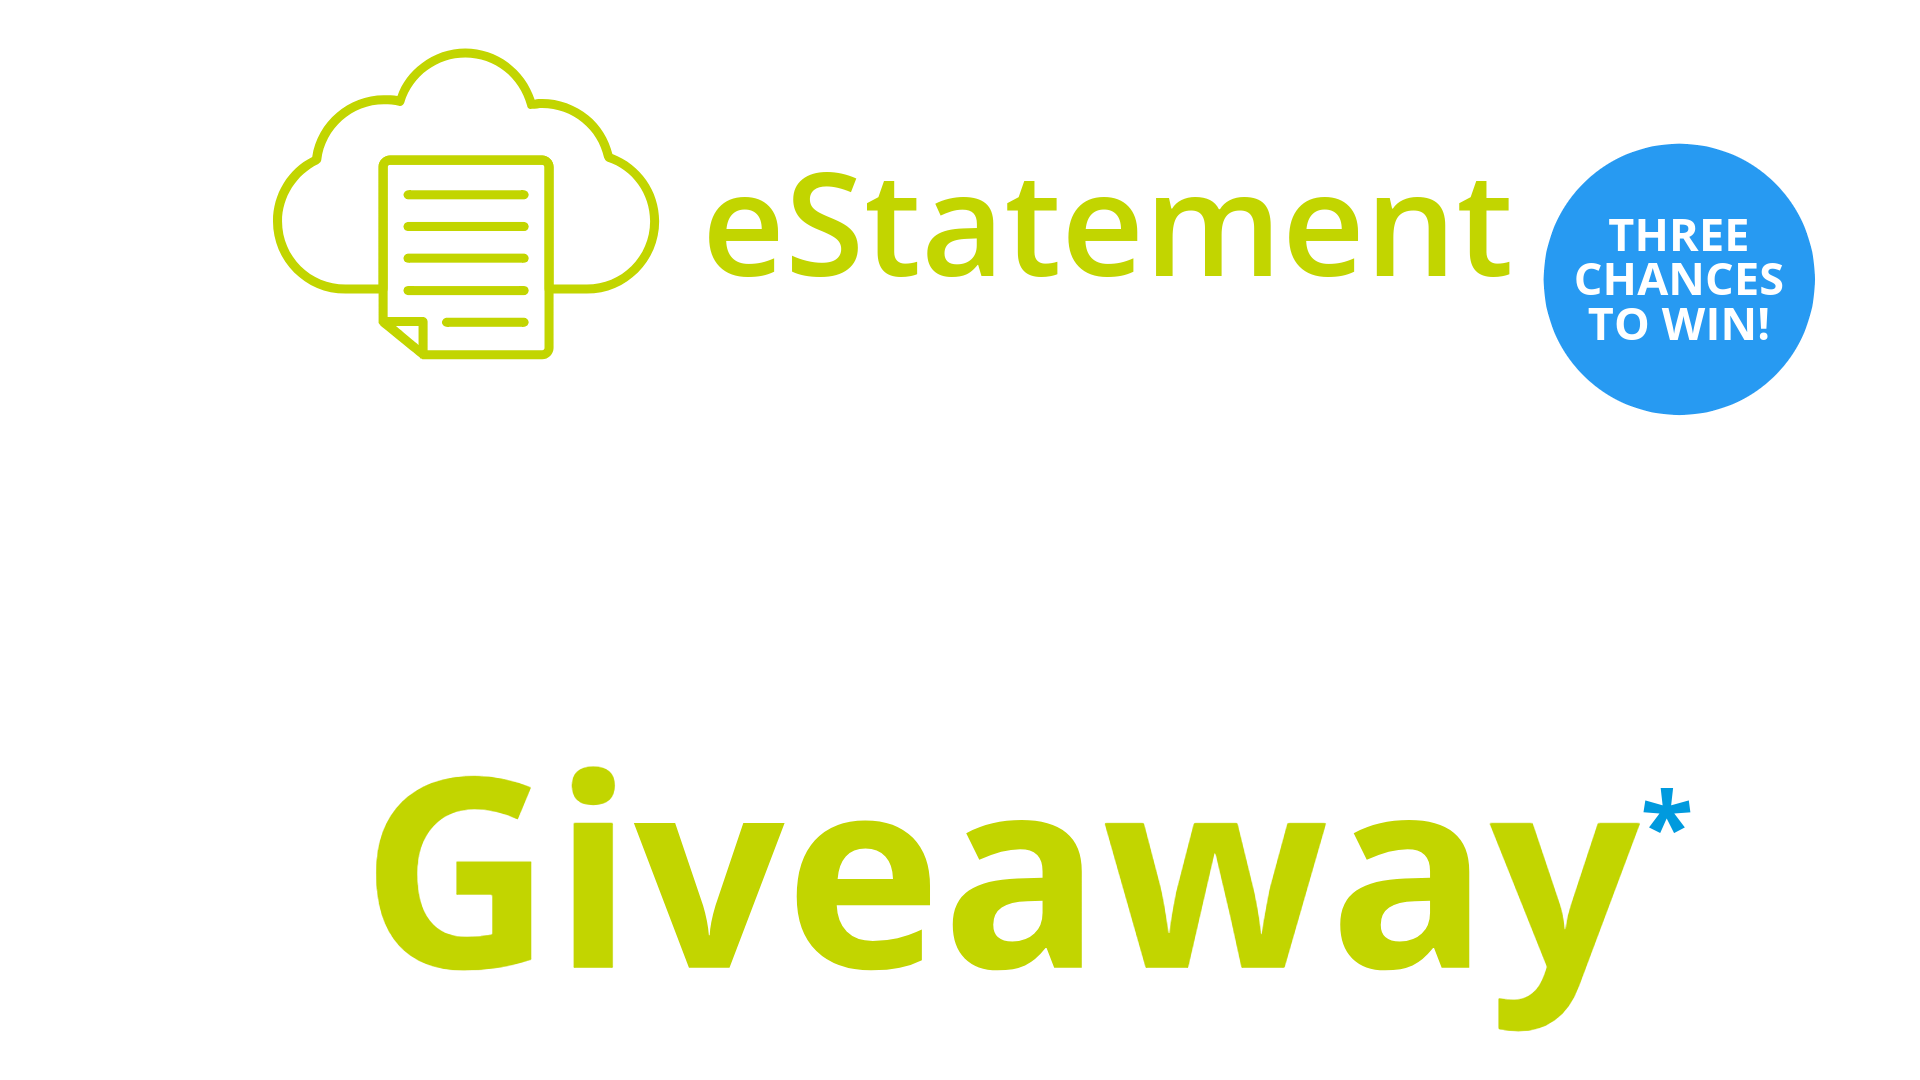 eStatement $1,000 Giveaway